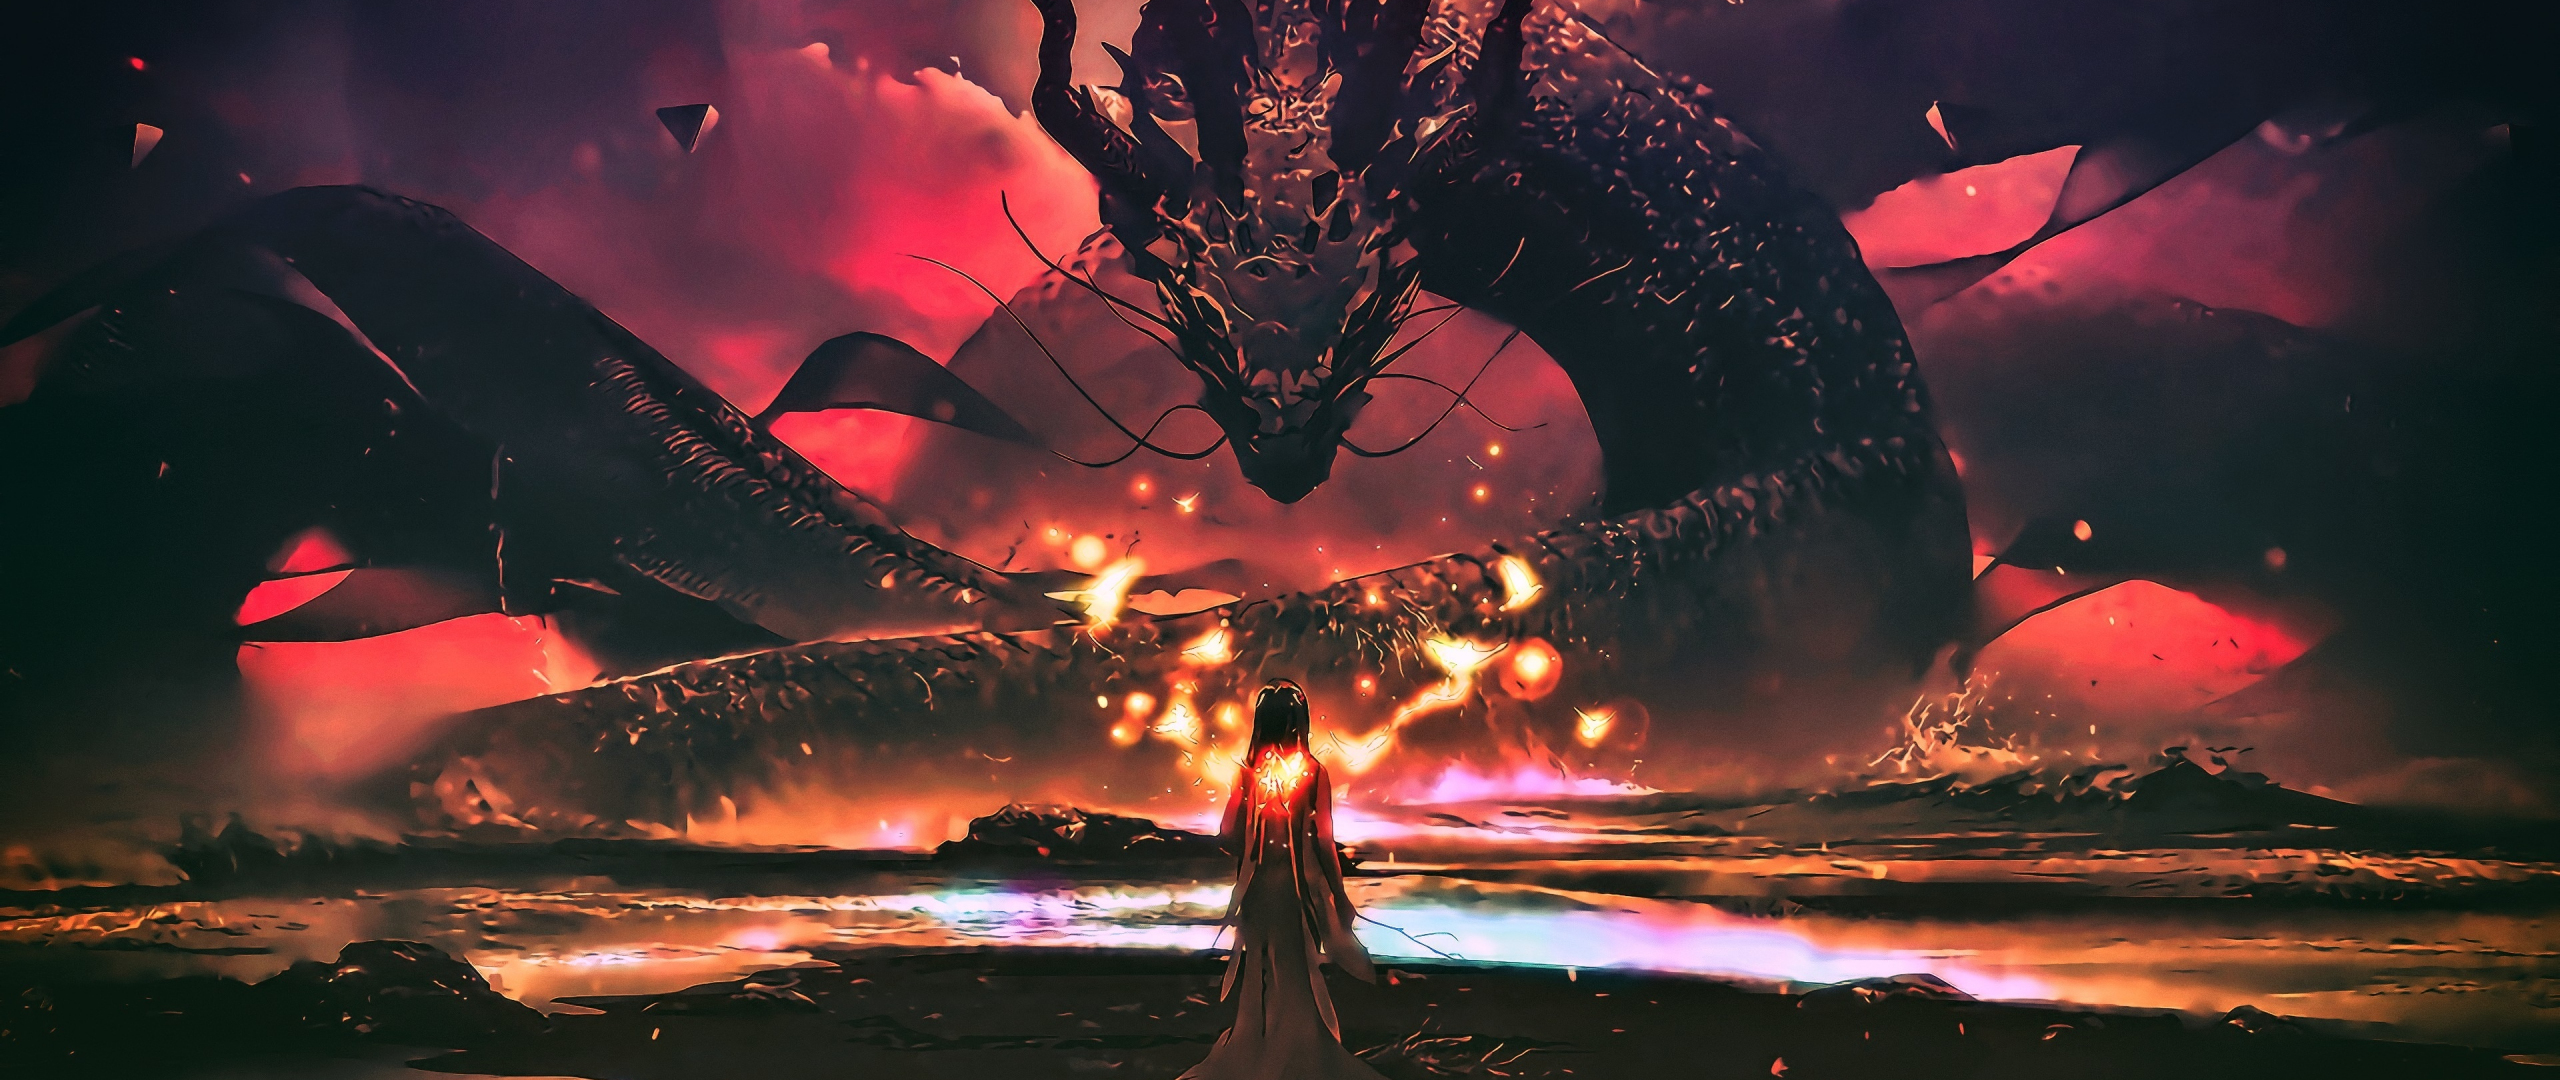 Download dragon, sea monster, woman, fantasy, art 2560x1080 wallpaper, dual wide 2560x1080 HD image, background, 4748